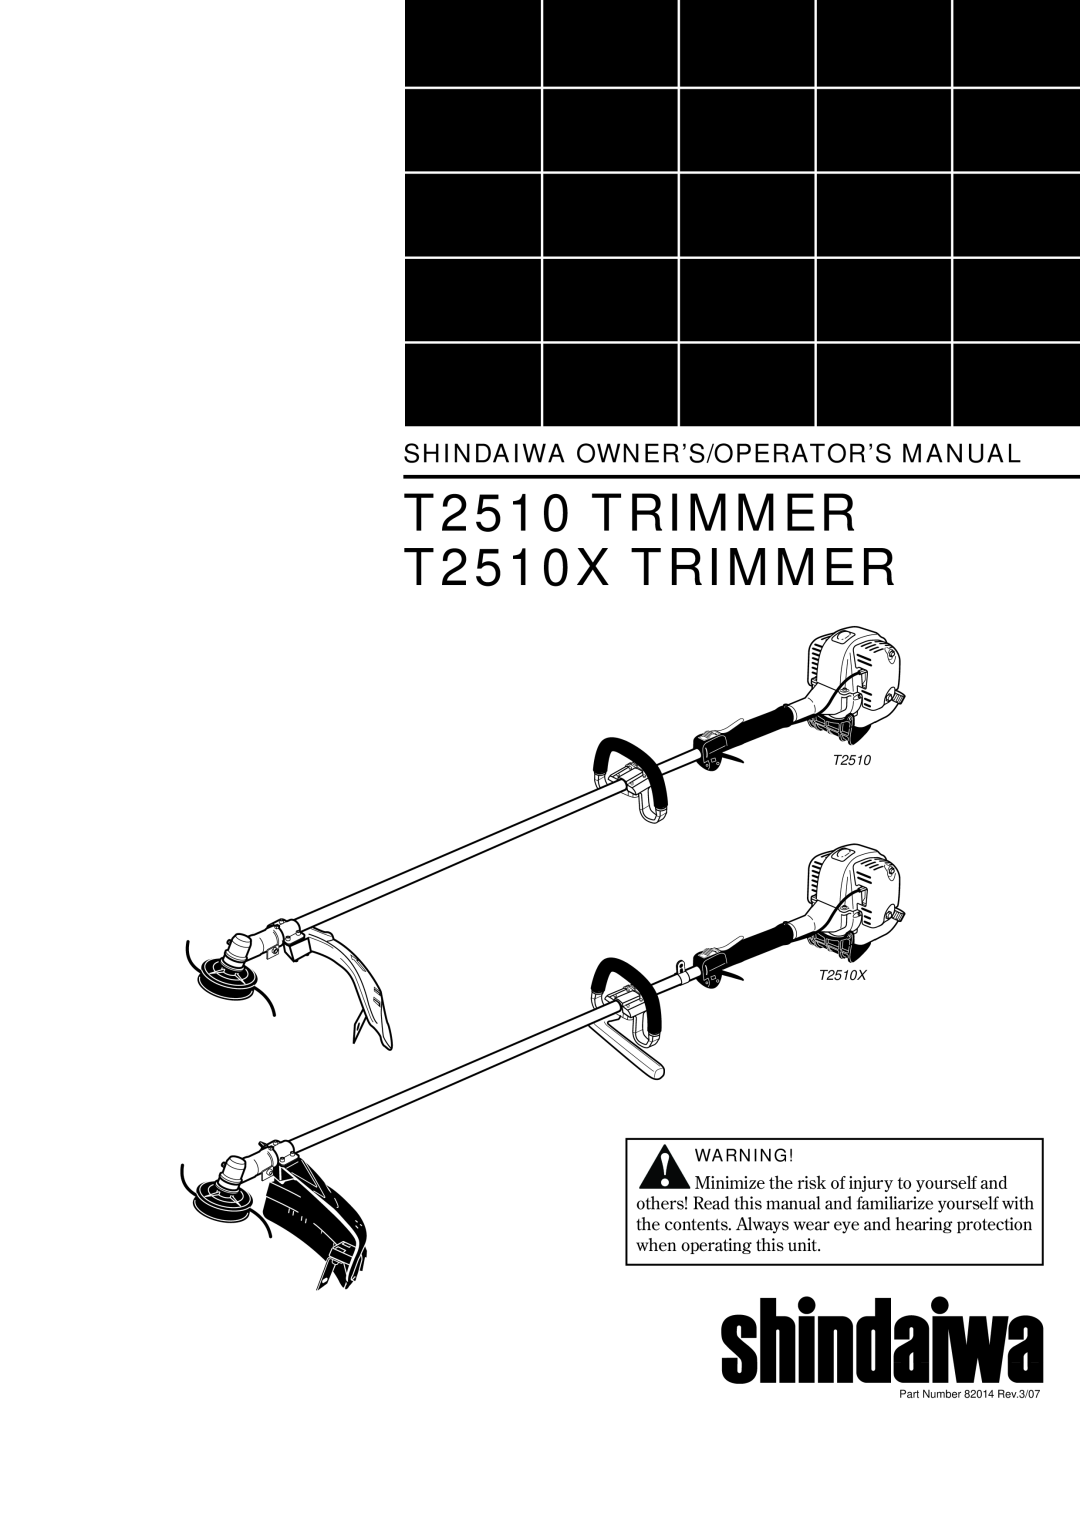 Shindaiwa 82014 manual T2510 TRIMMER T2510X TRIMMER, Shindaiwa Owner’S/Operator’S Manual 